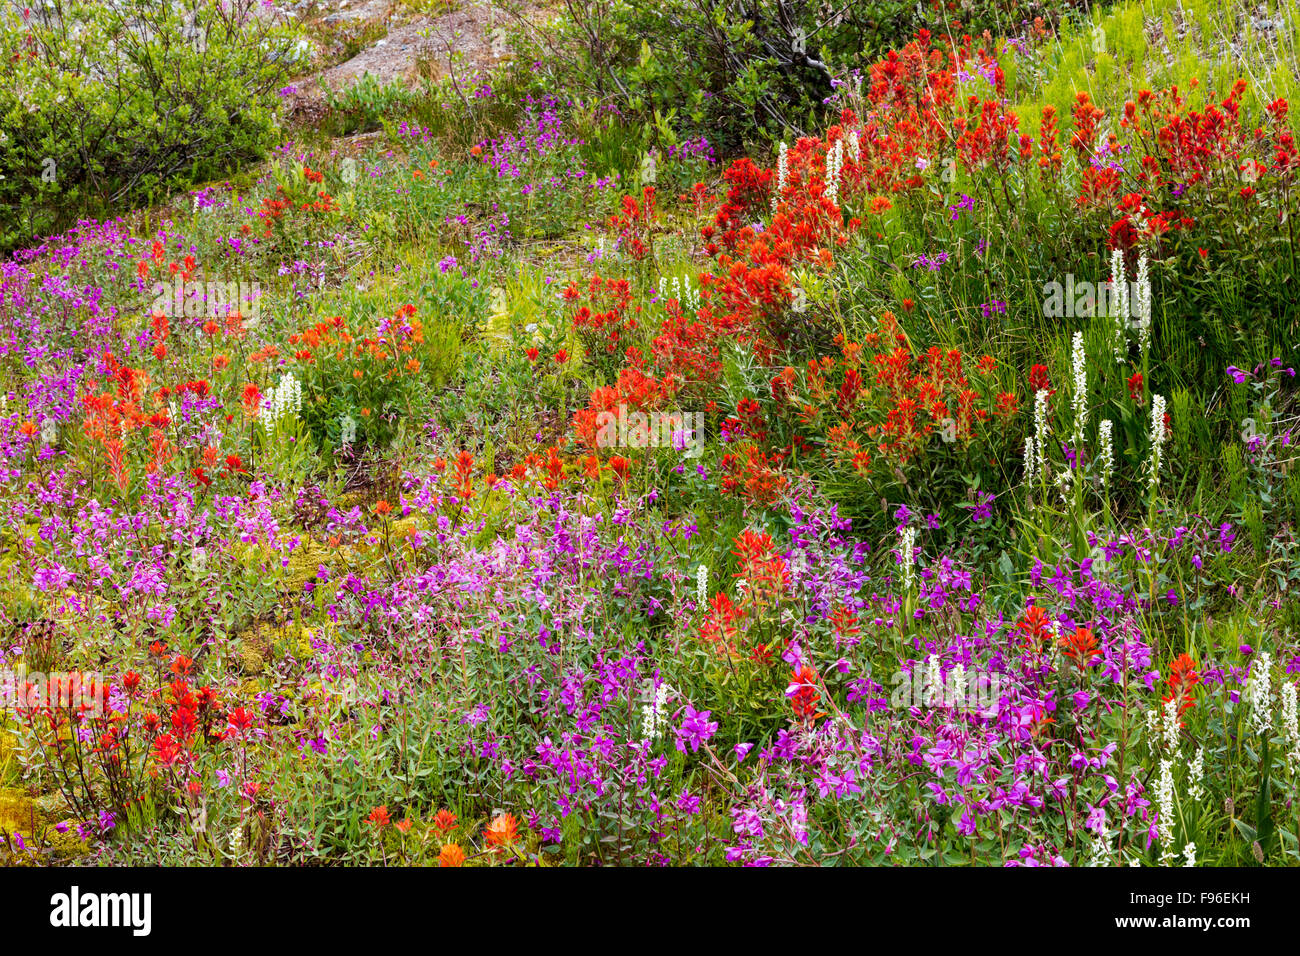 British Columbia, Kanada, Chilcotin Region, Alpenblumen, roten Pinsel, Castilleja Miniata Laubbaumarten Weidenröschen, Stockfoto